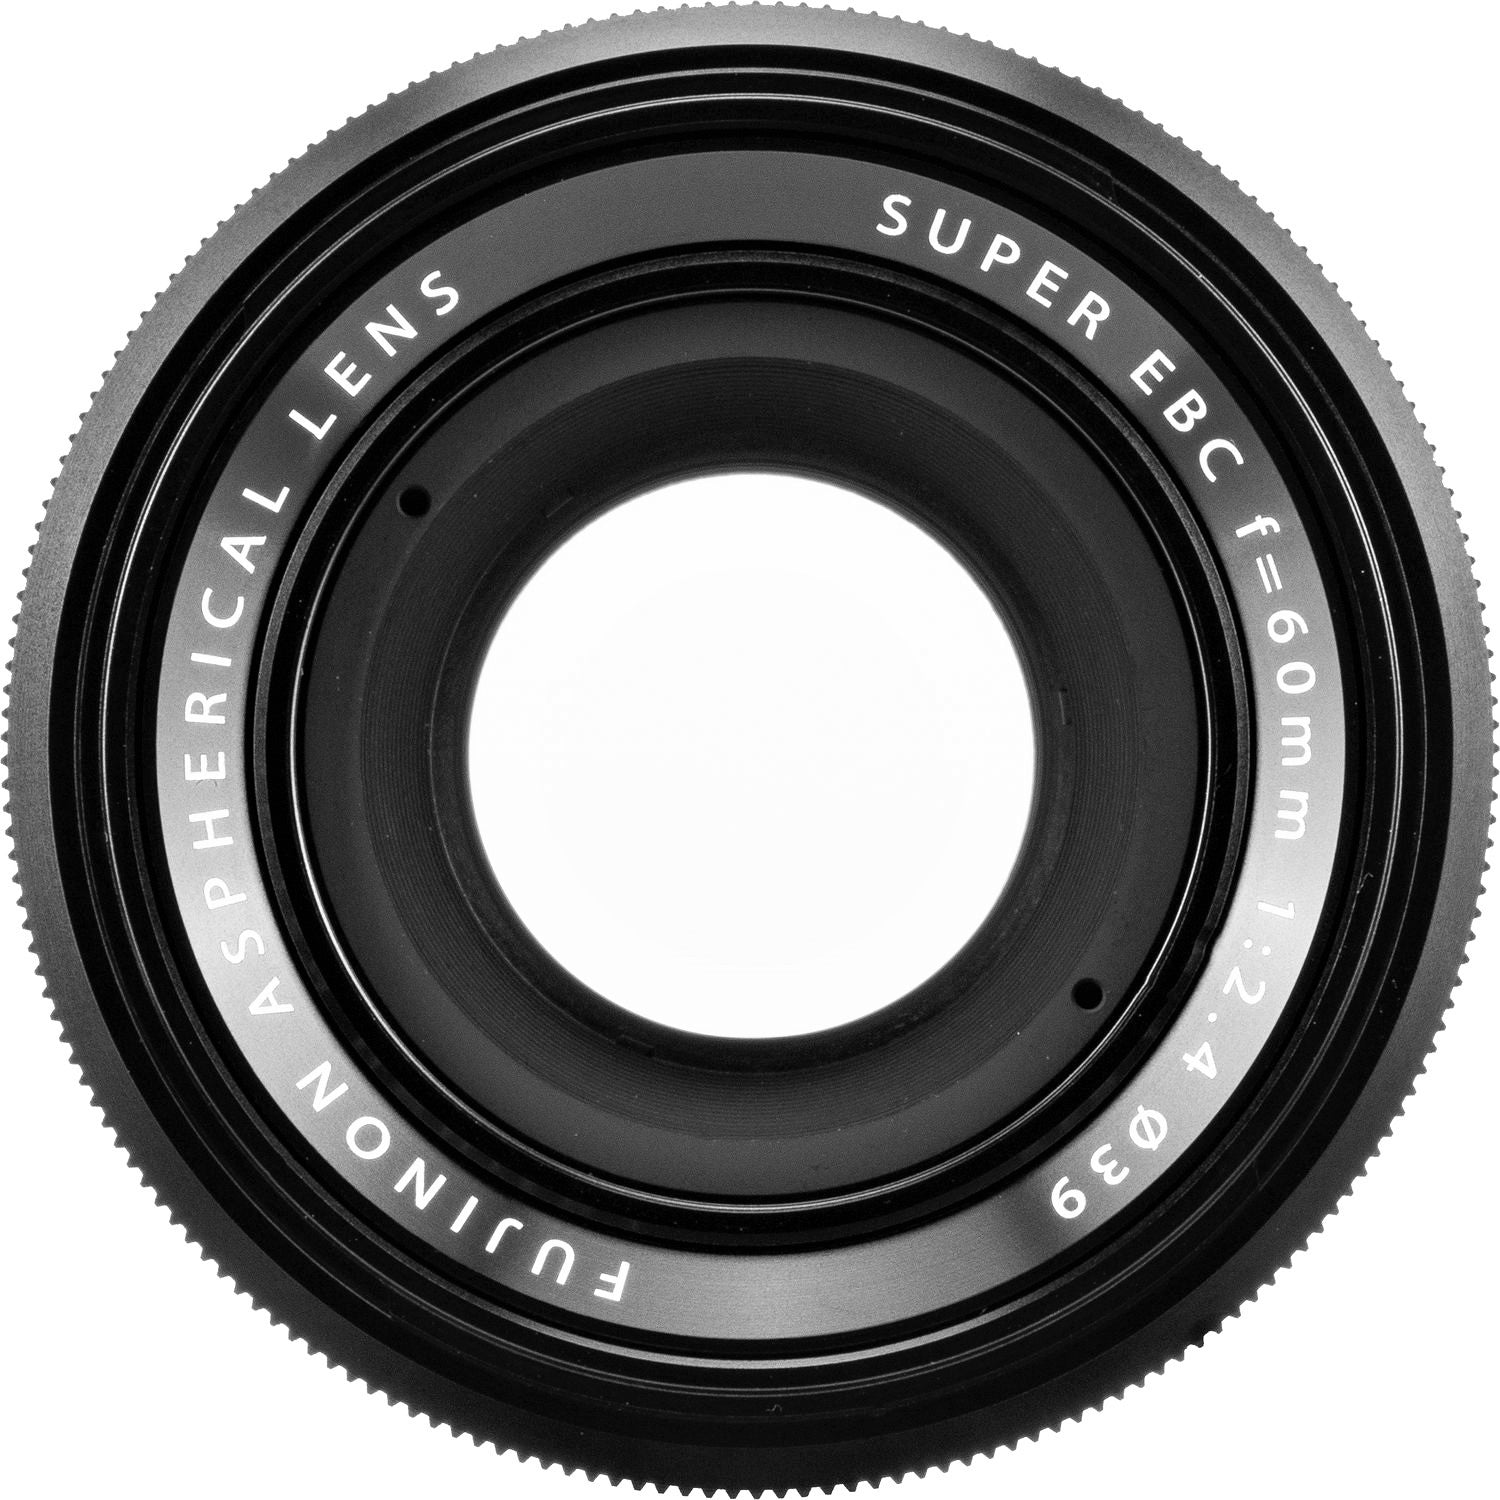 Fujifilm XF 60mm F2.4 R Macro Lens - Close Up View